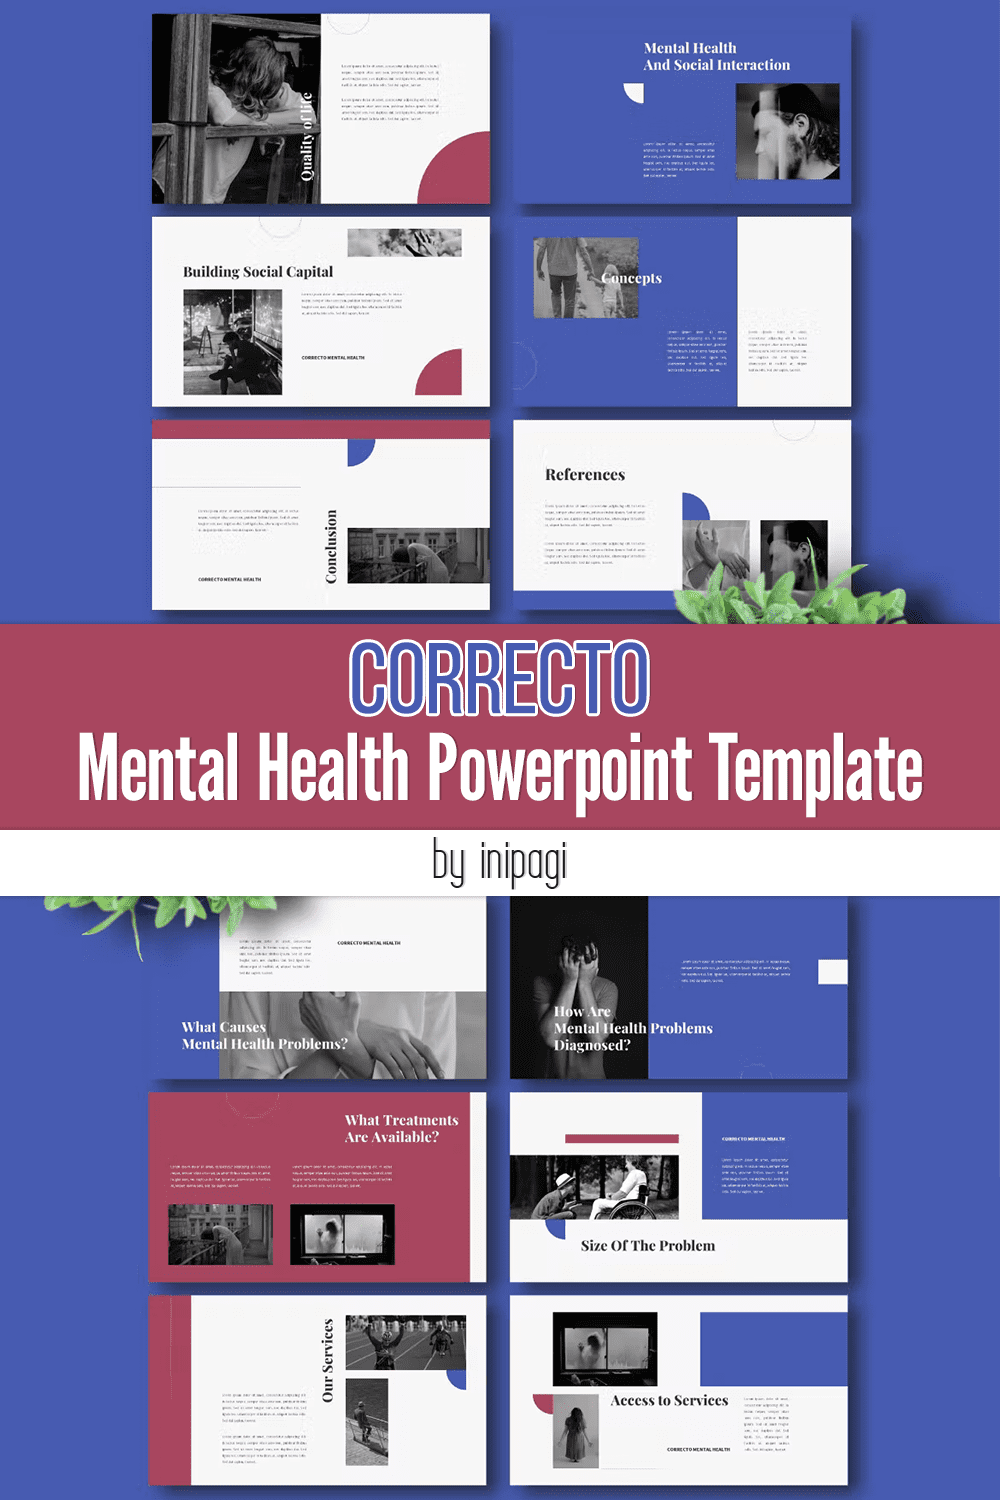 Correcto - Mental Health Powerpoint Template - Pinterest.